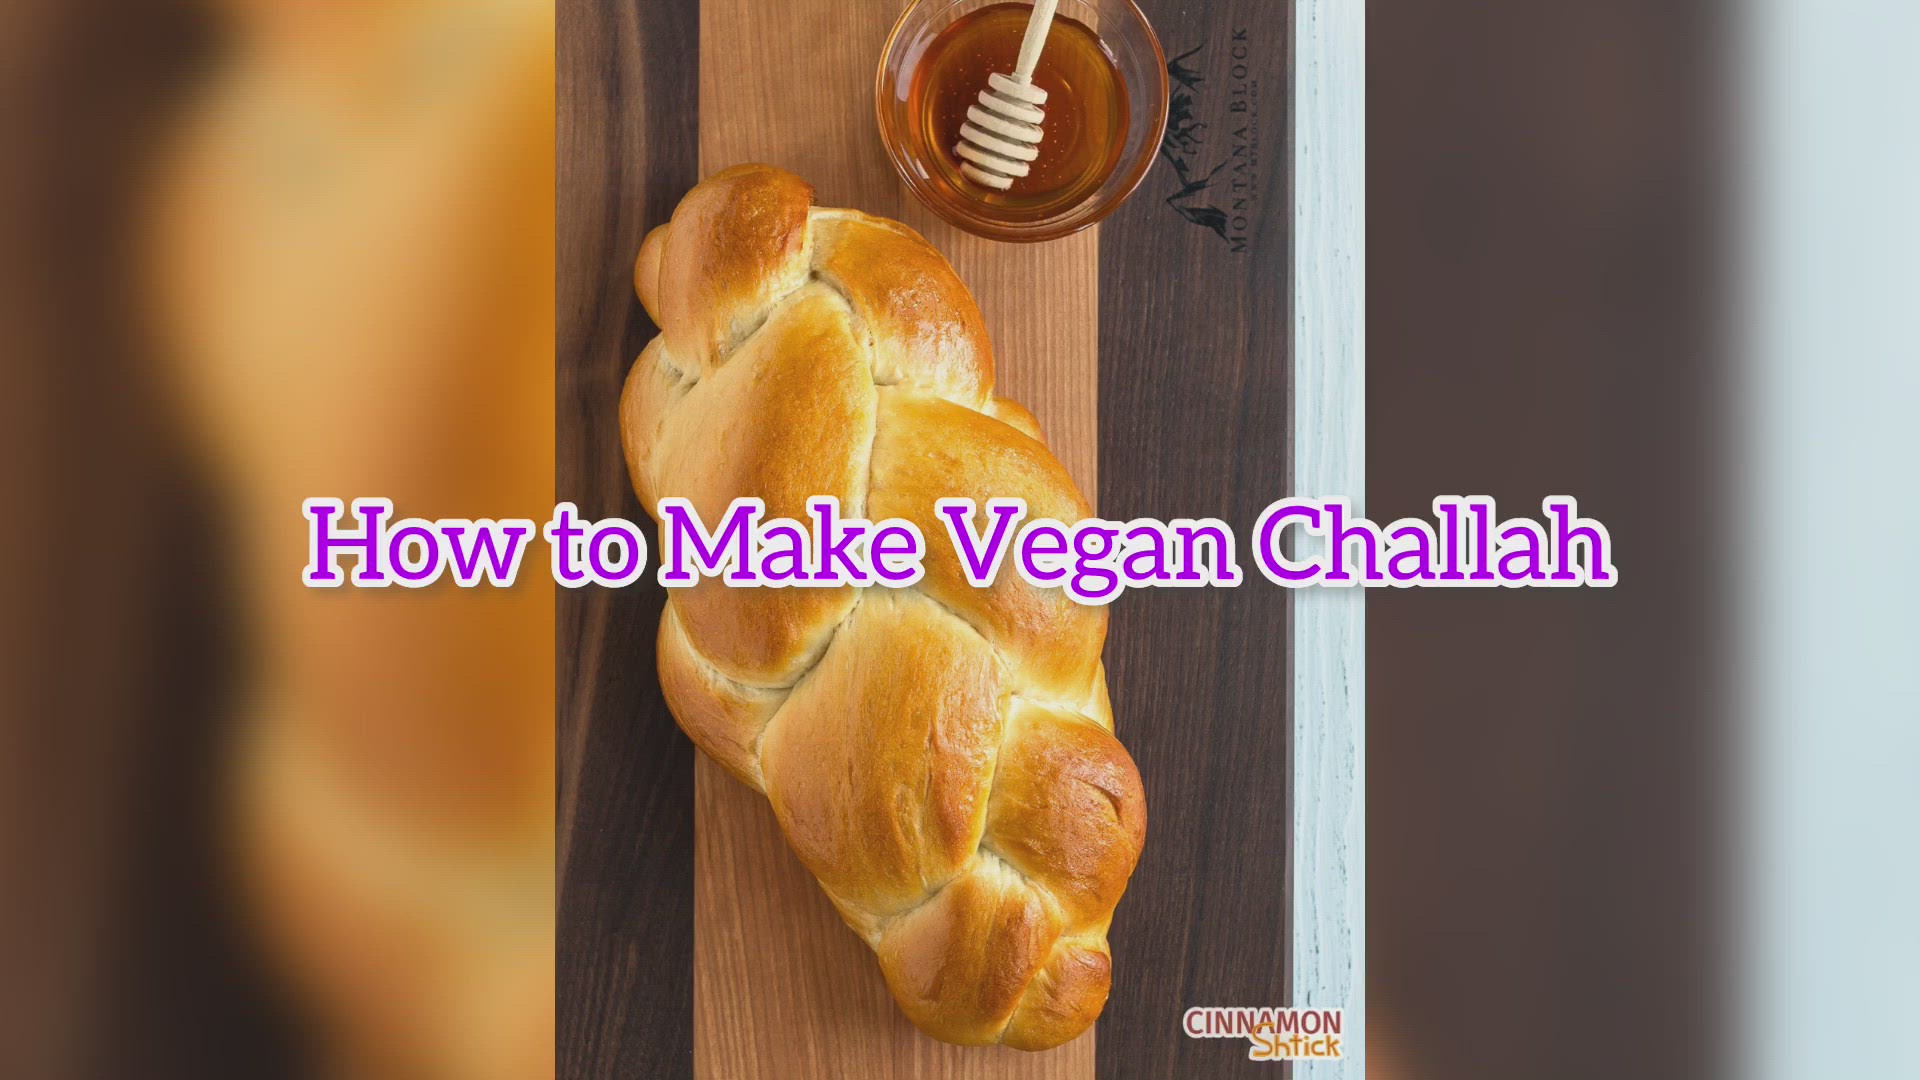 Maple-Glazed Vegan Water Challah Recipe